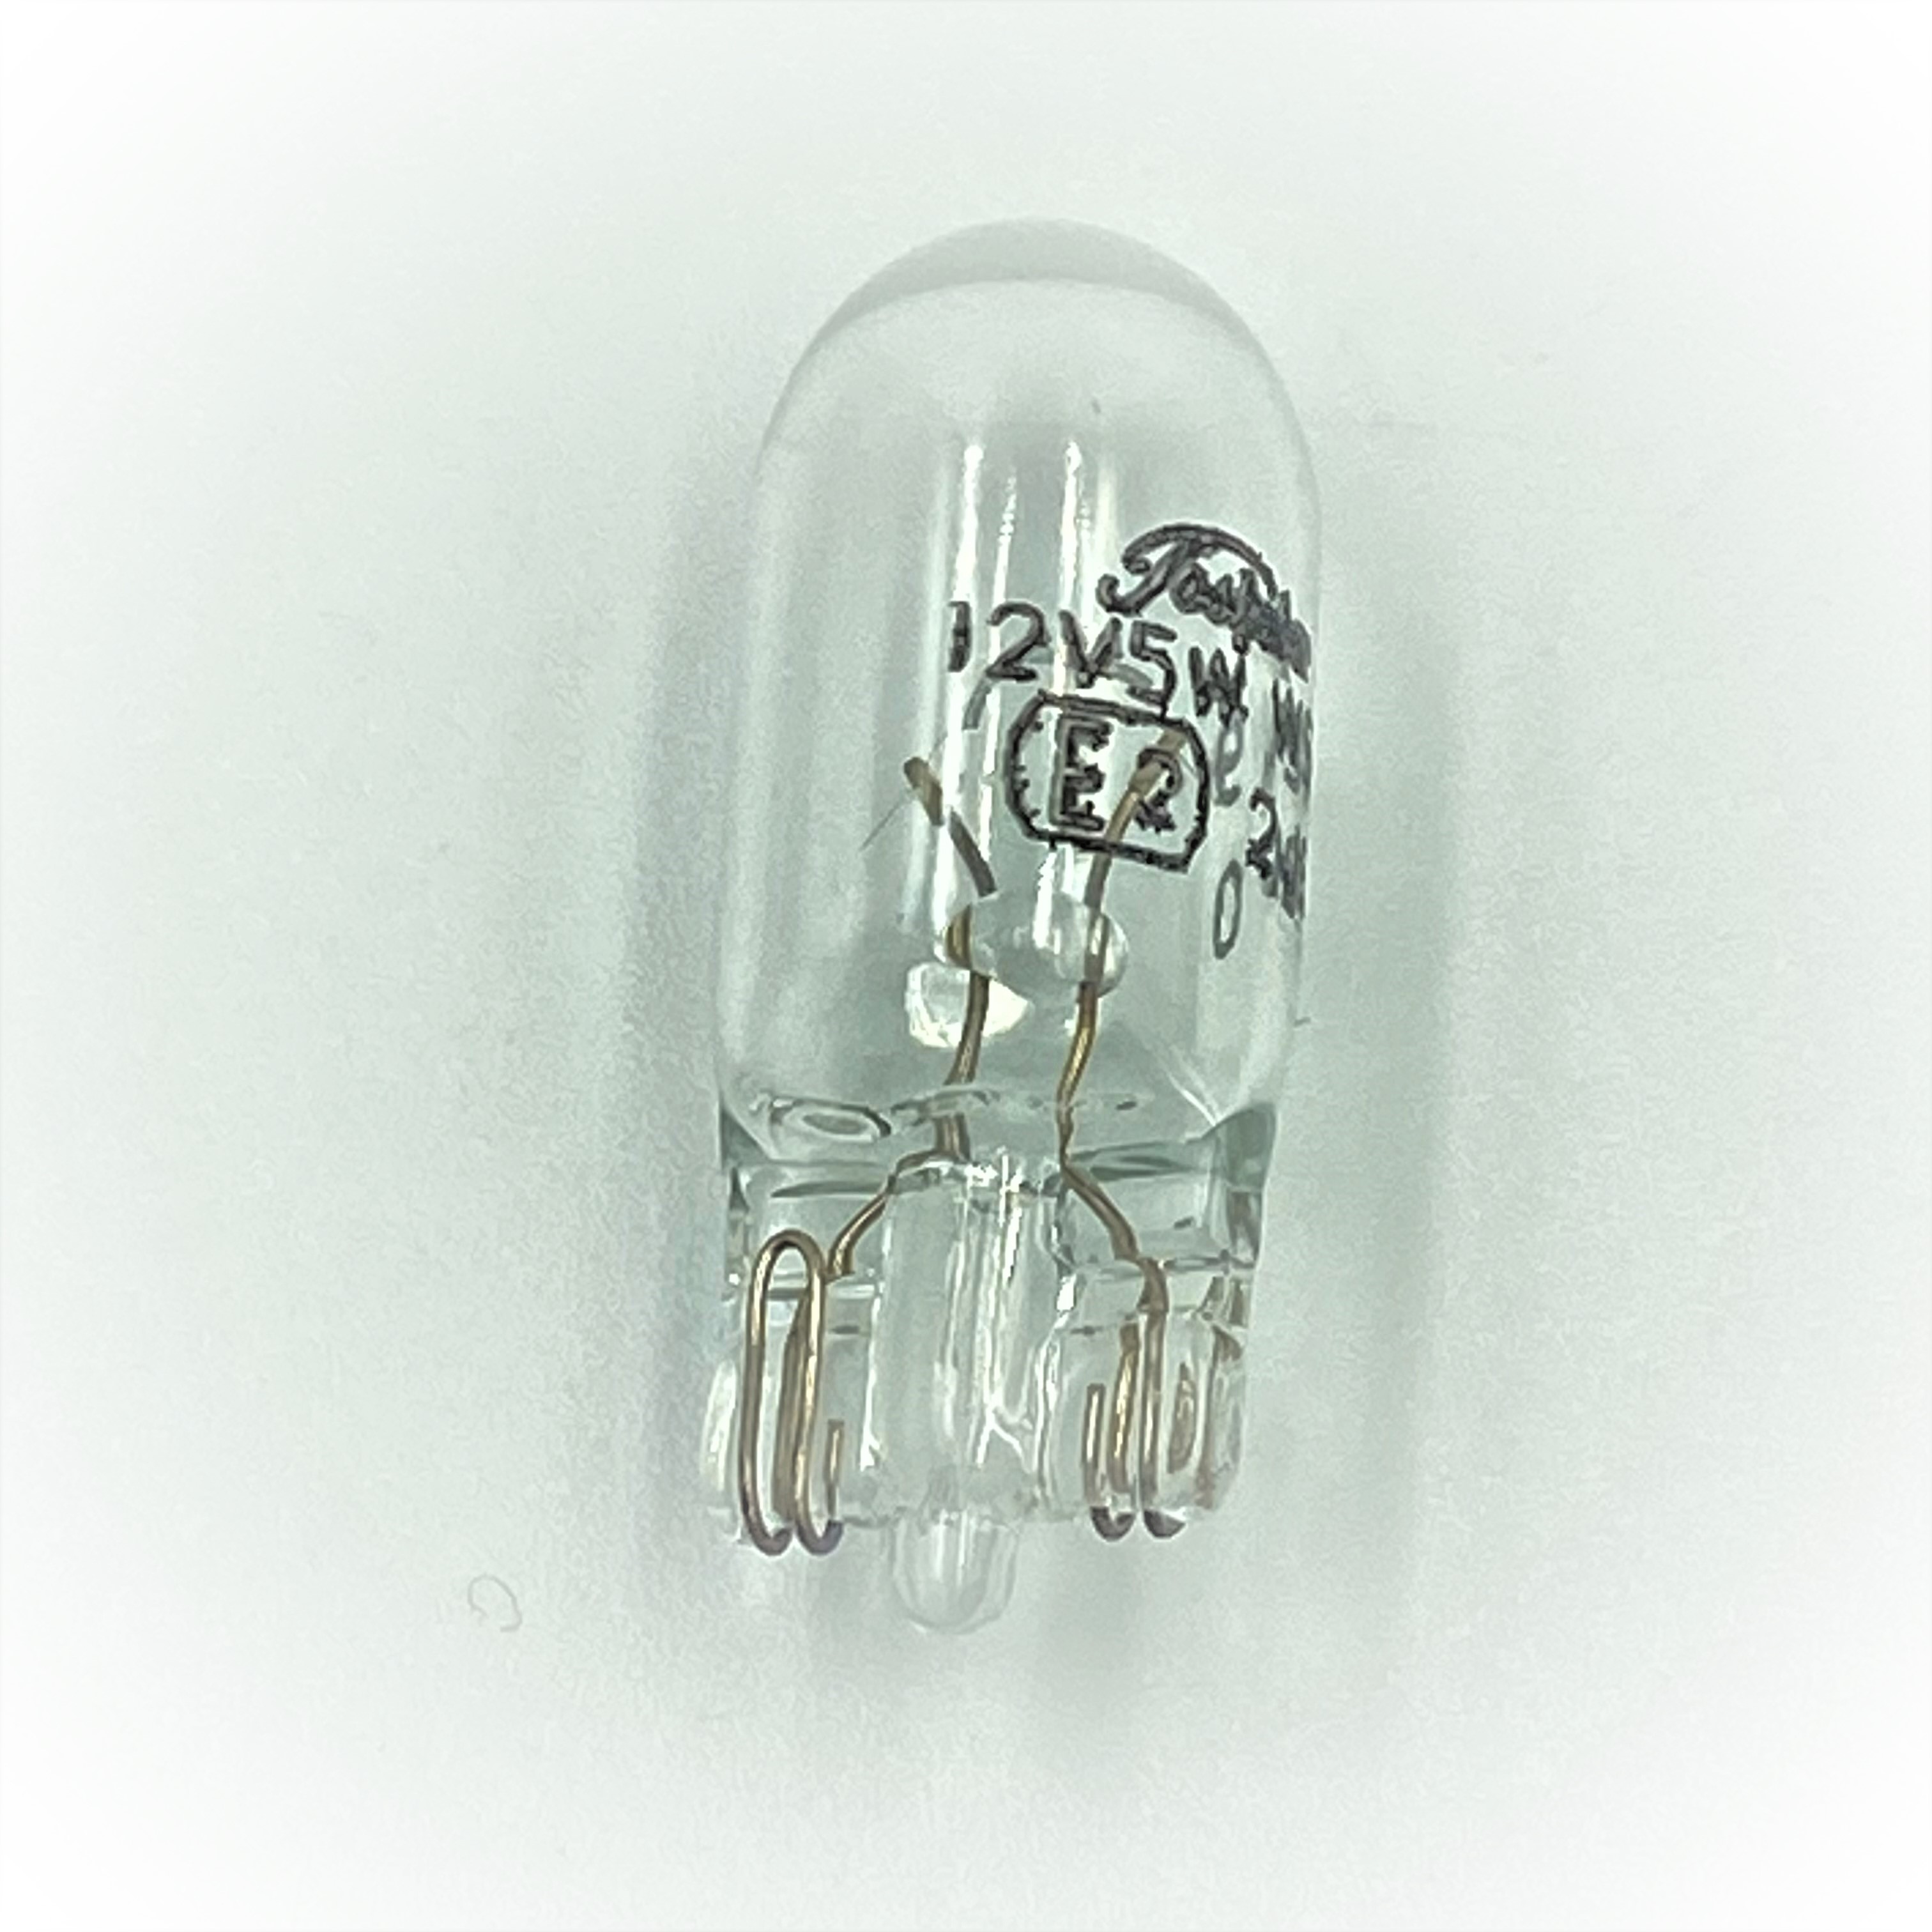 Wedge Type Sewing Bulb (12v 5w) - 000026002